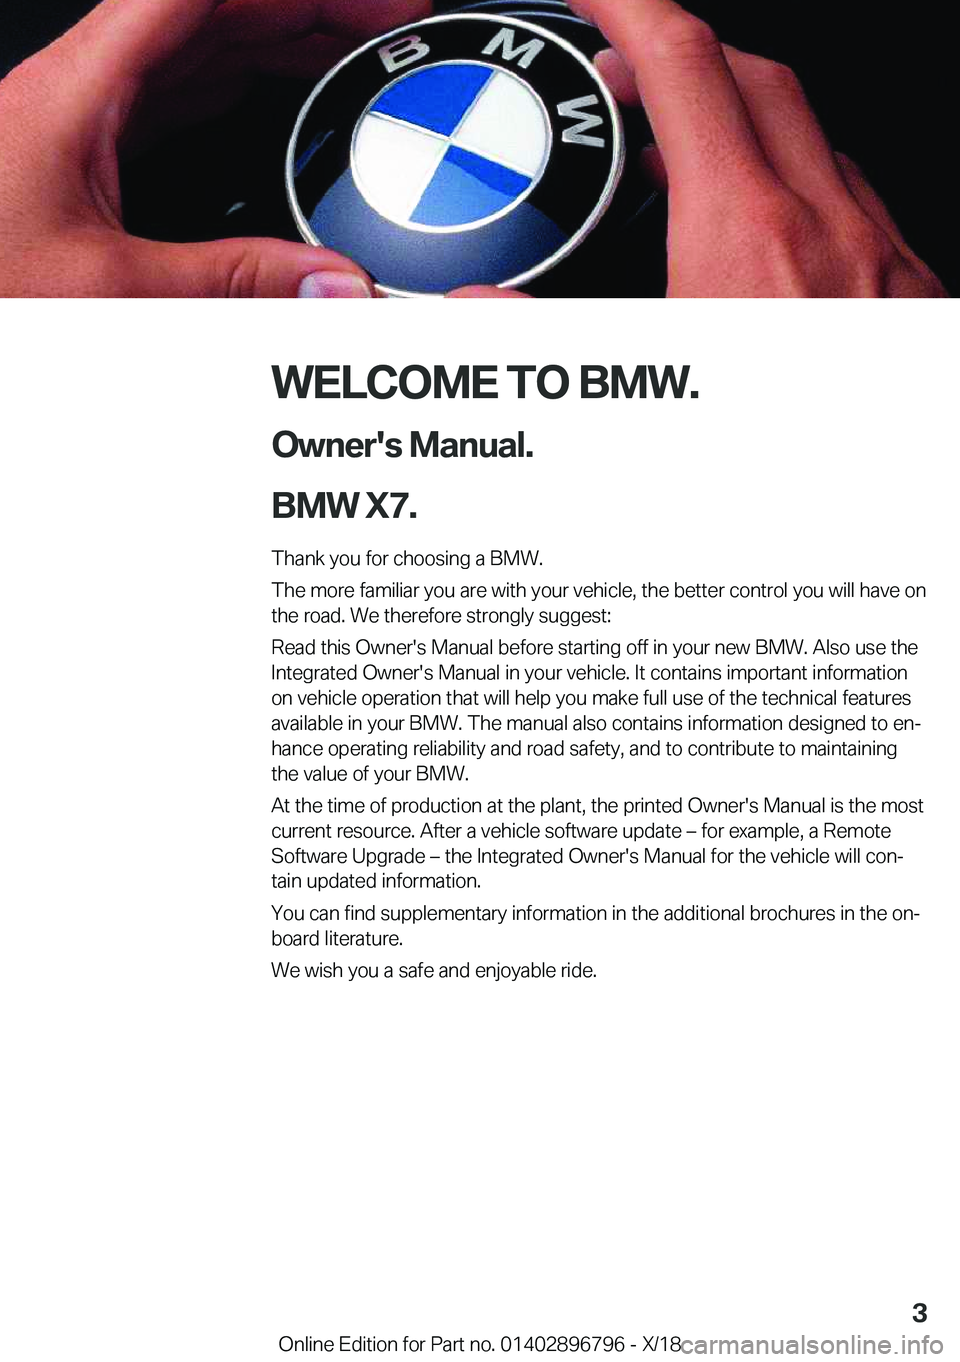 BMW X7 2019  Owners Manual �W�E�L�C�O�M�E��T�O��B�M�W�.�O�w�n�e�r�'�s��M�a�n�u�a�l�.
�B�M�W��X�7�.
�T�h�a�n�k��y�o�u��f�o�r��c�h�o�o�s�i�n�g��a��B�M�W�.
�T�h�e��m�o�r�e��f�a�m�i�l�i�a�r��y�o�u��a�r�e��w�i�t�h�